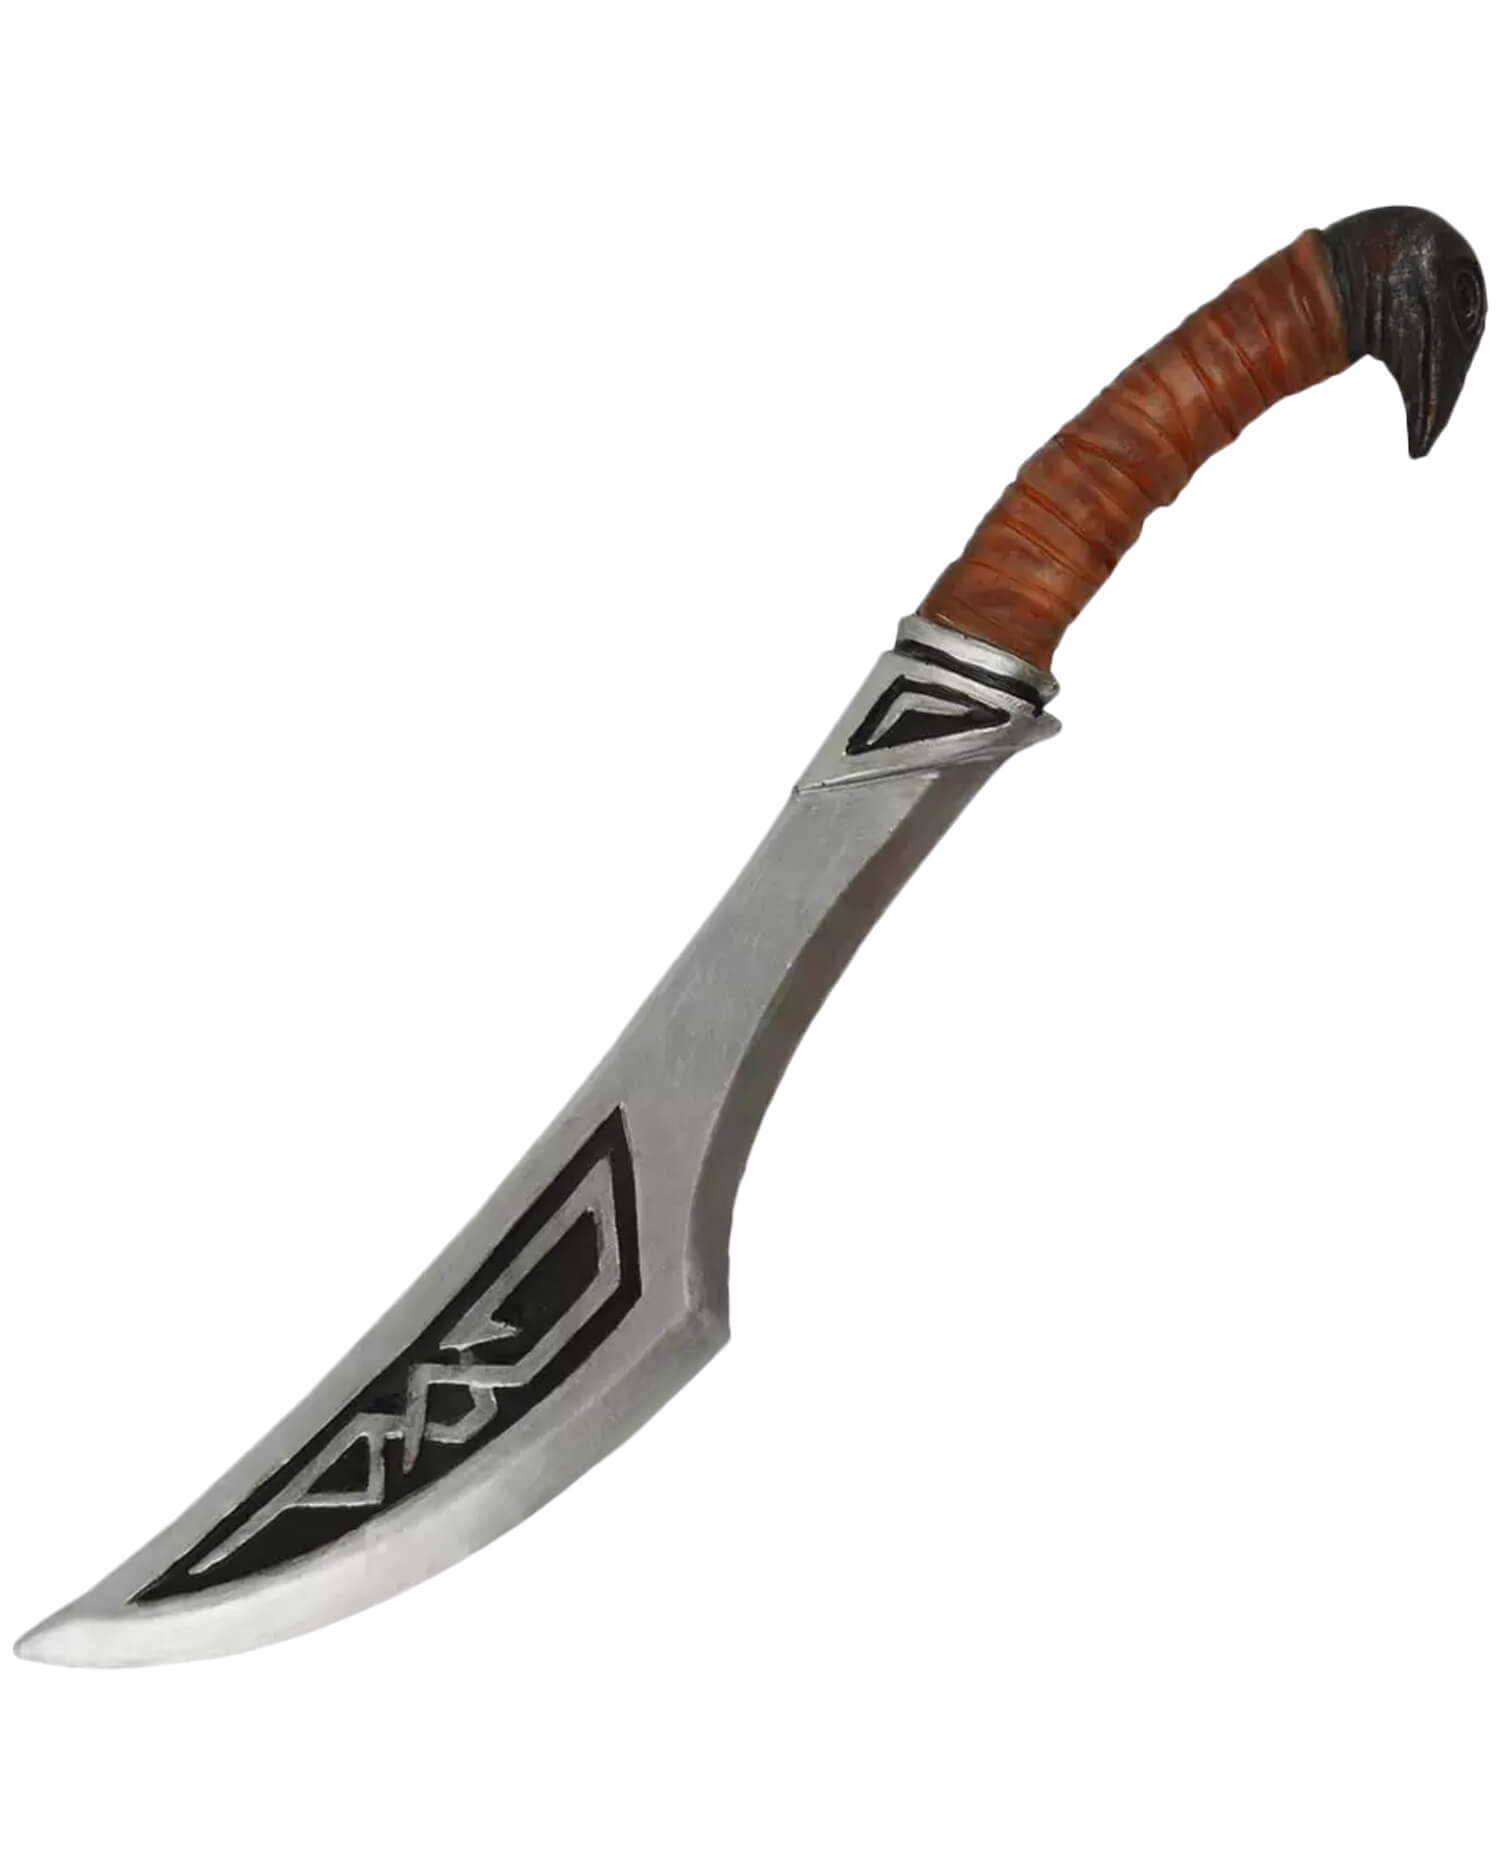 Grimmzahn hunting knife